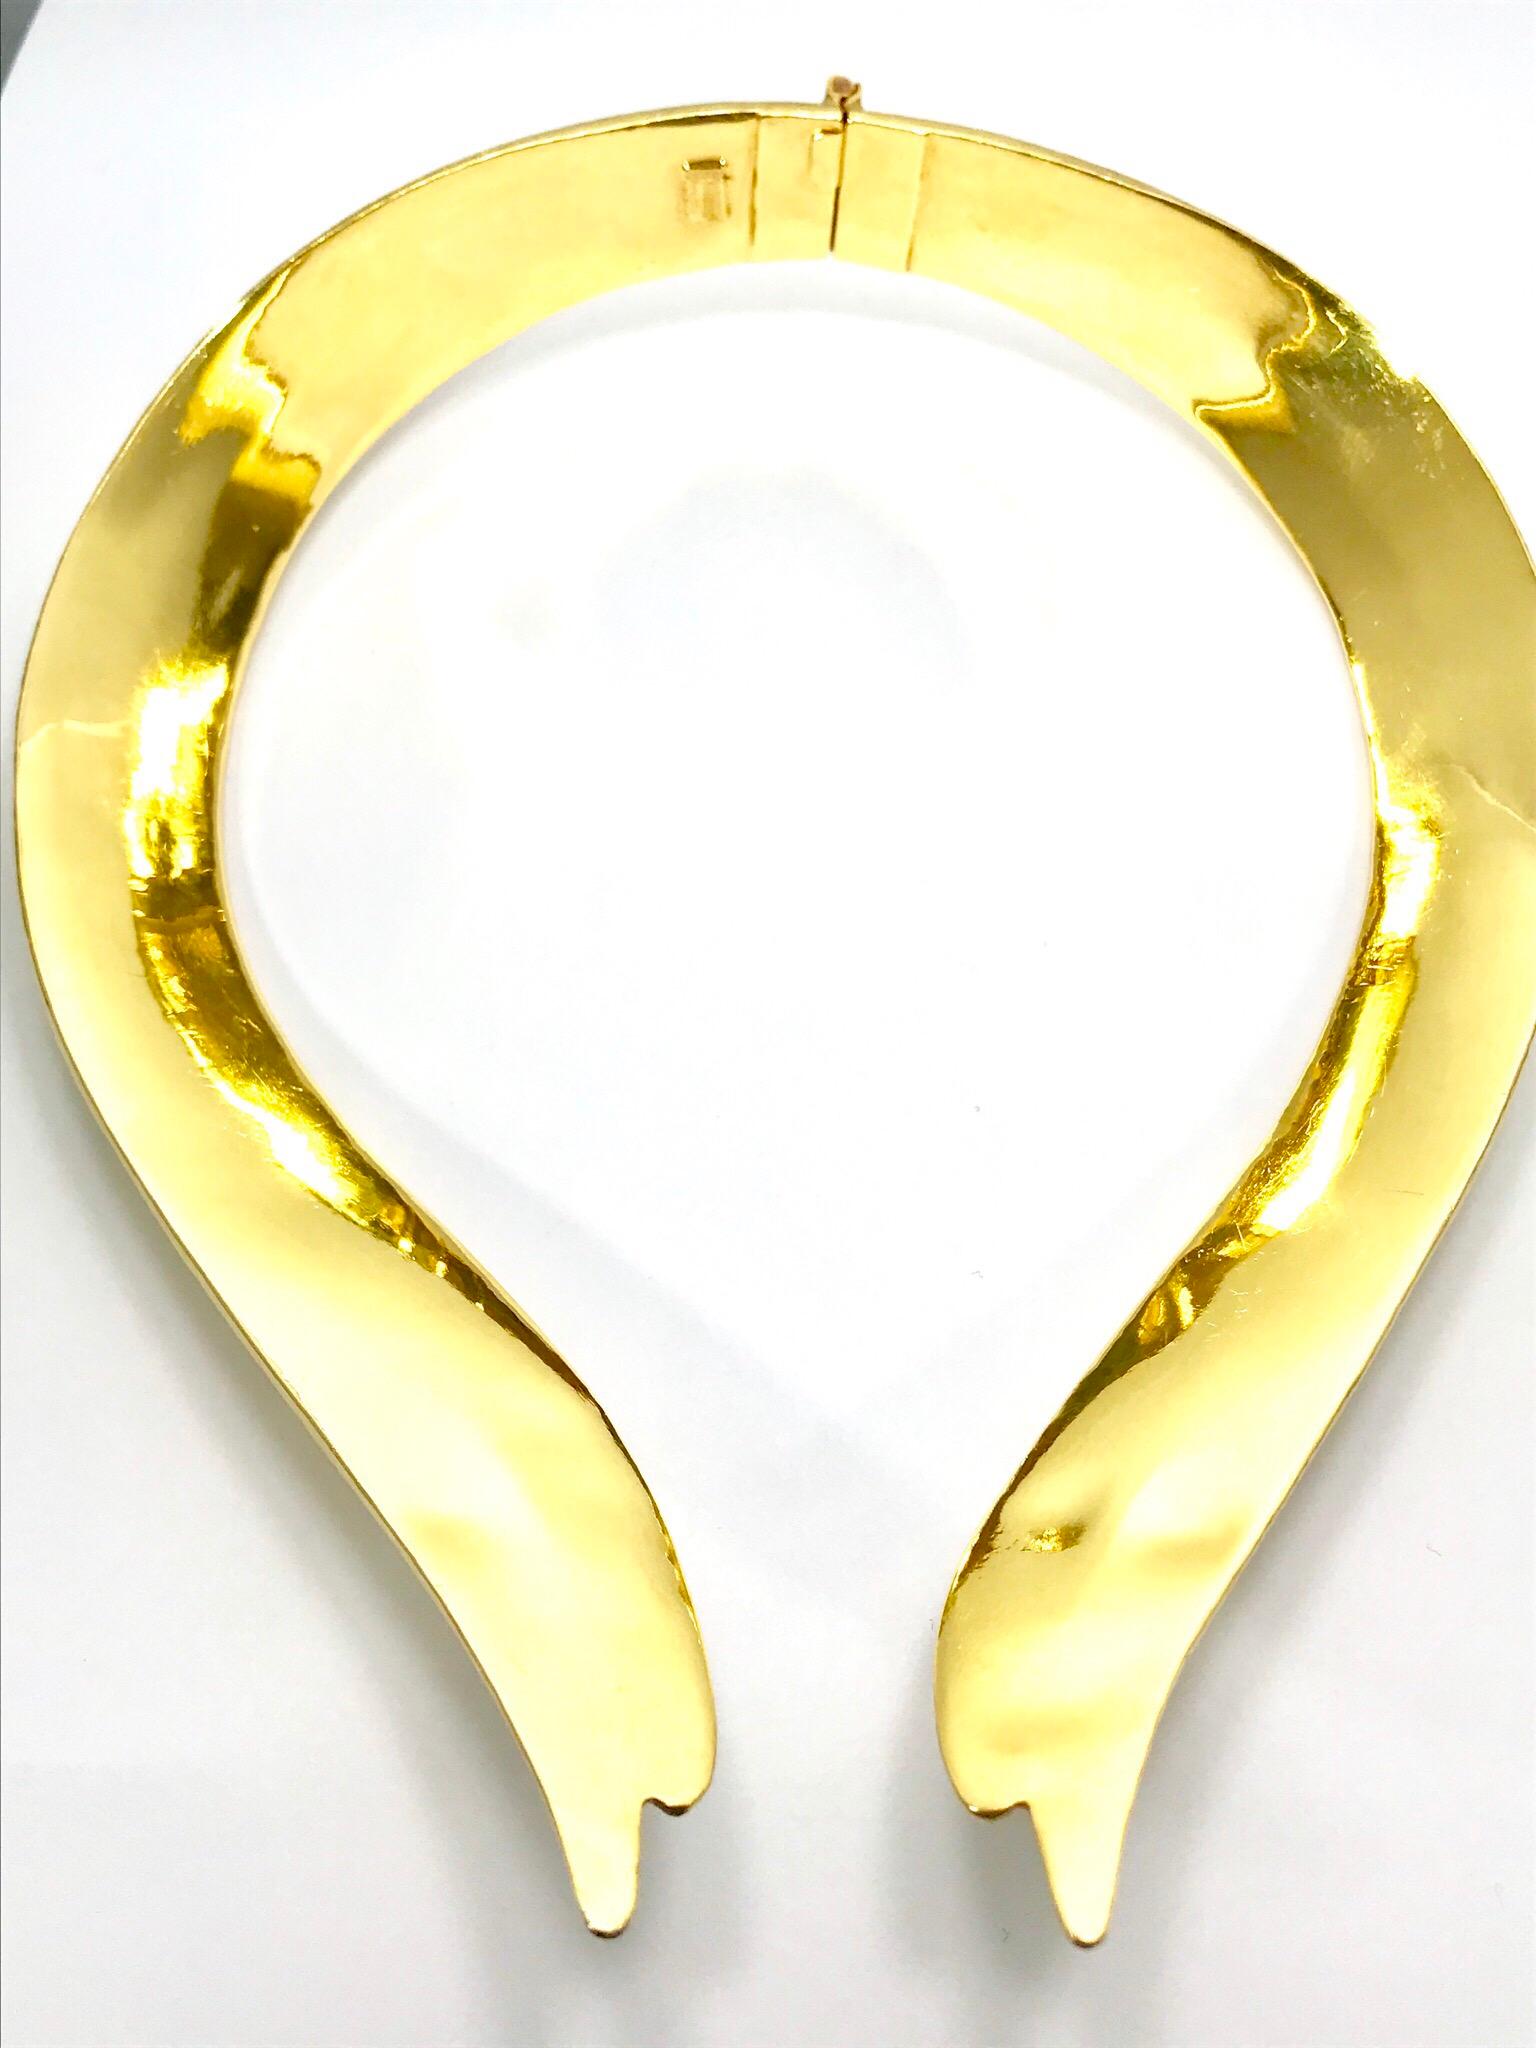 Zolotas Handcrafted 22Kt Flexible Hinged Collar Necklace in Original Neck Folder 6